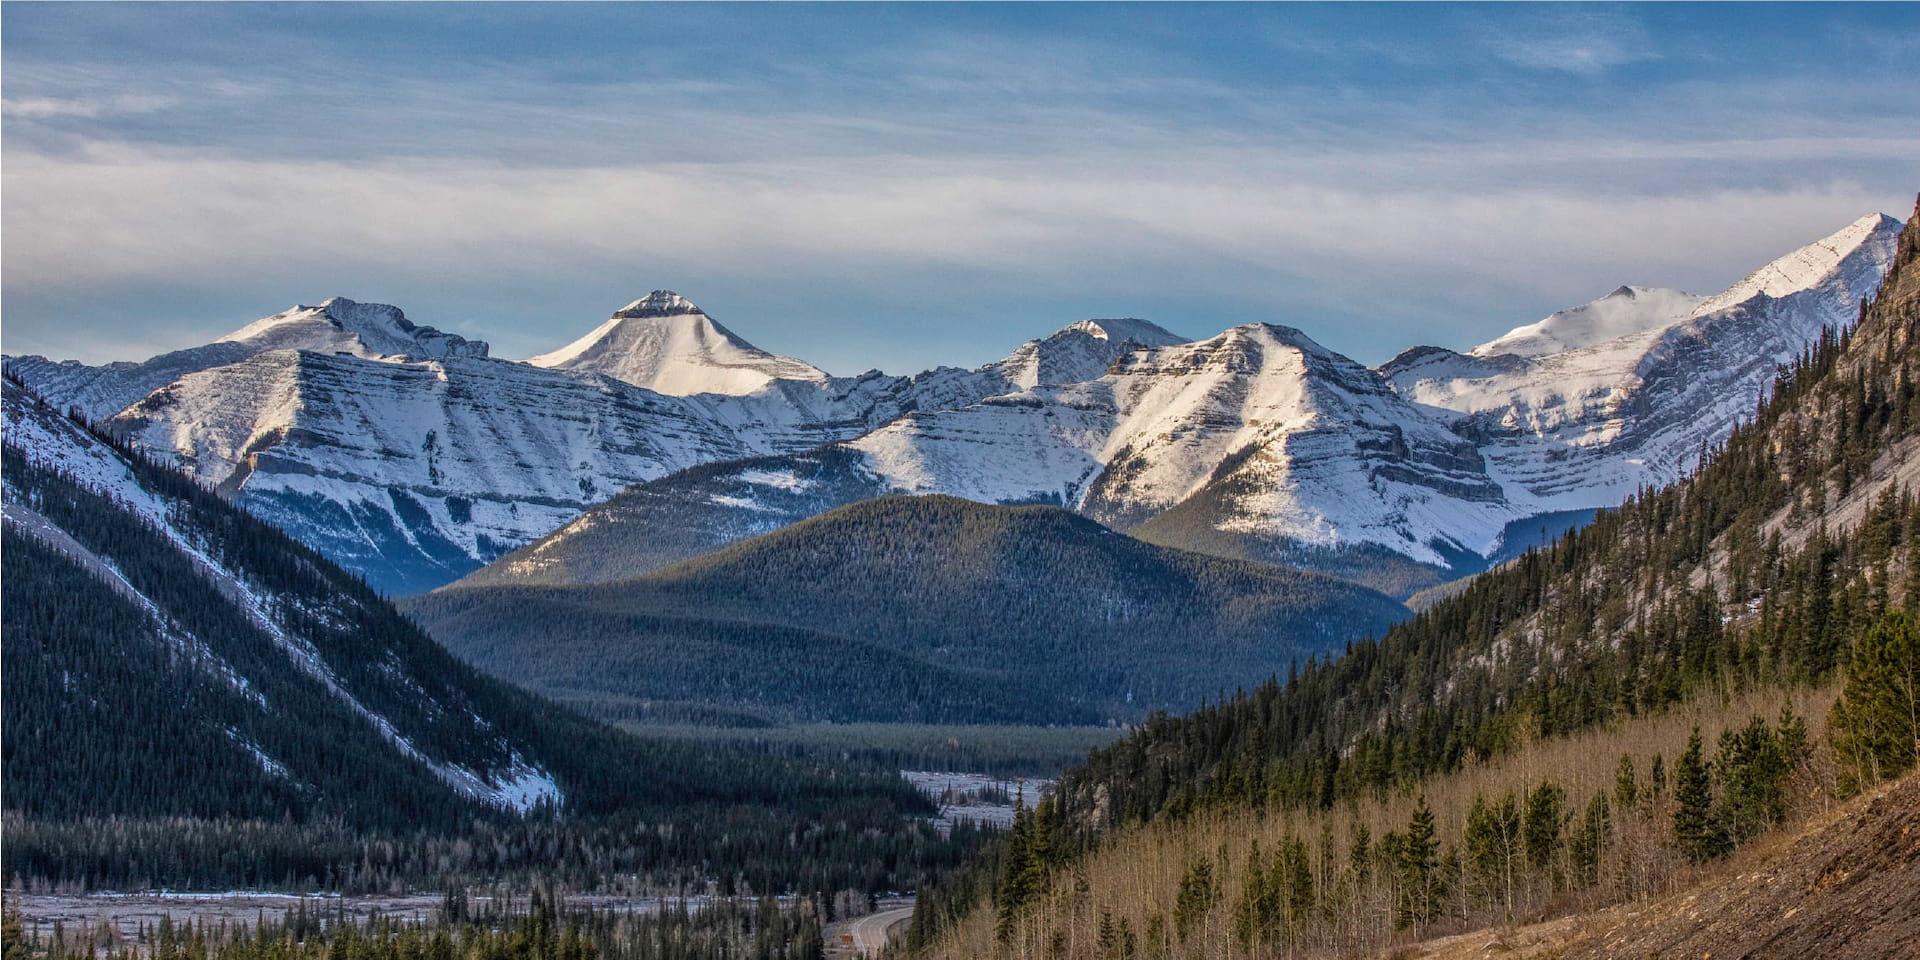 A beautiful view of a mountain range